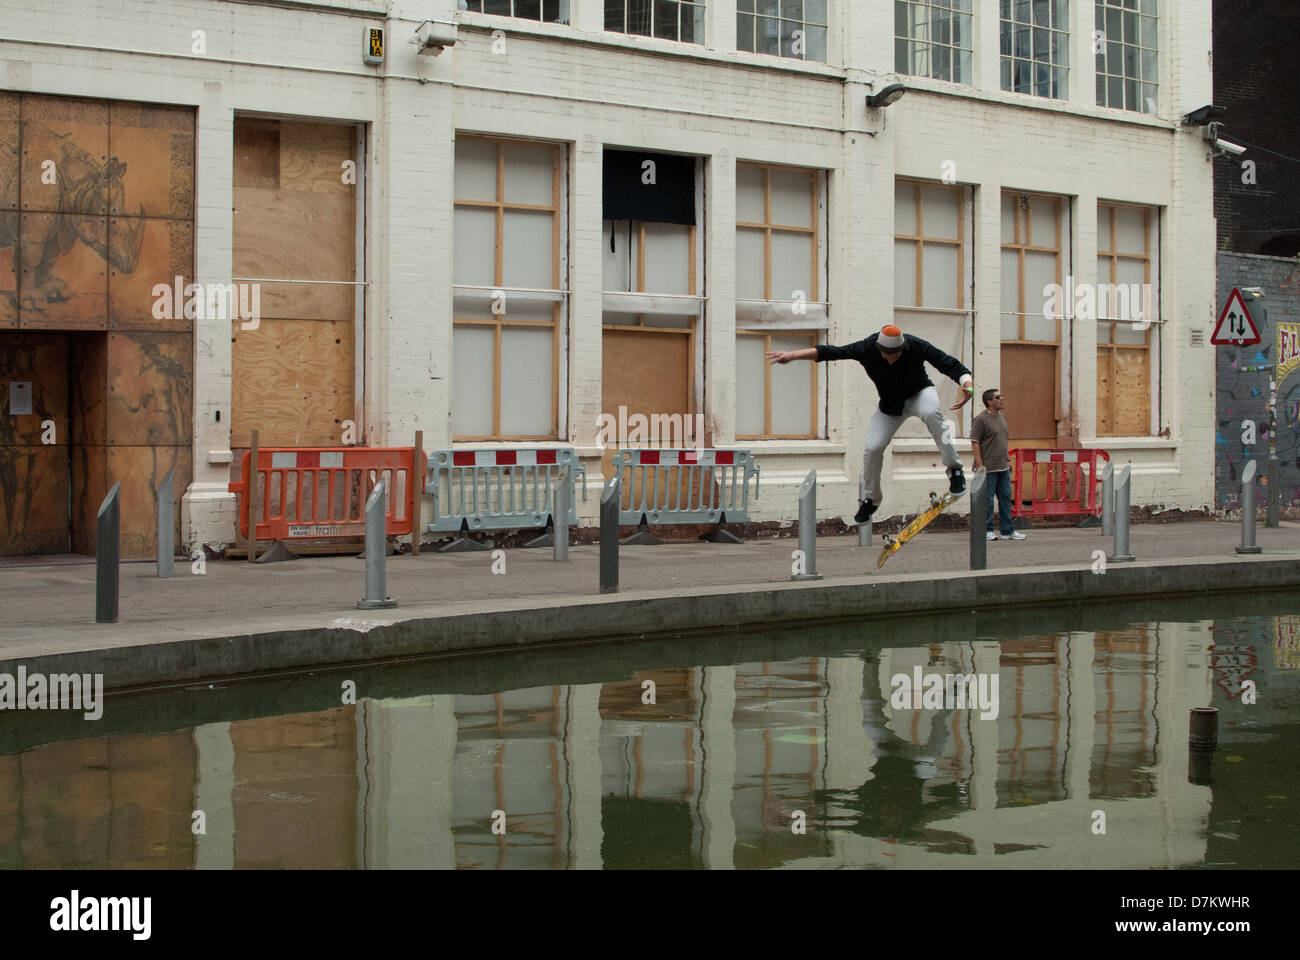 Skateboarder performing a trick in Custard Factory, Digbeth, Birmingham Stock Photo